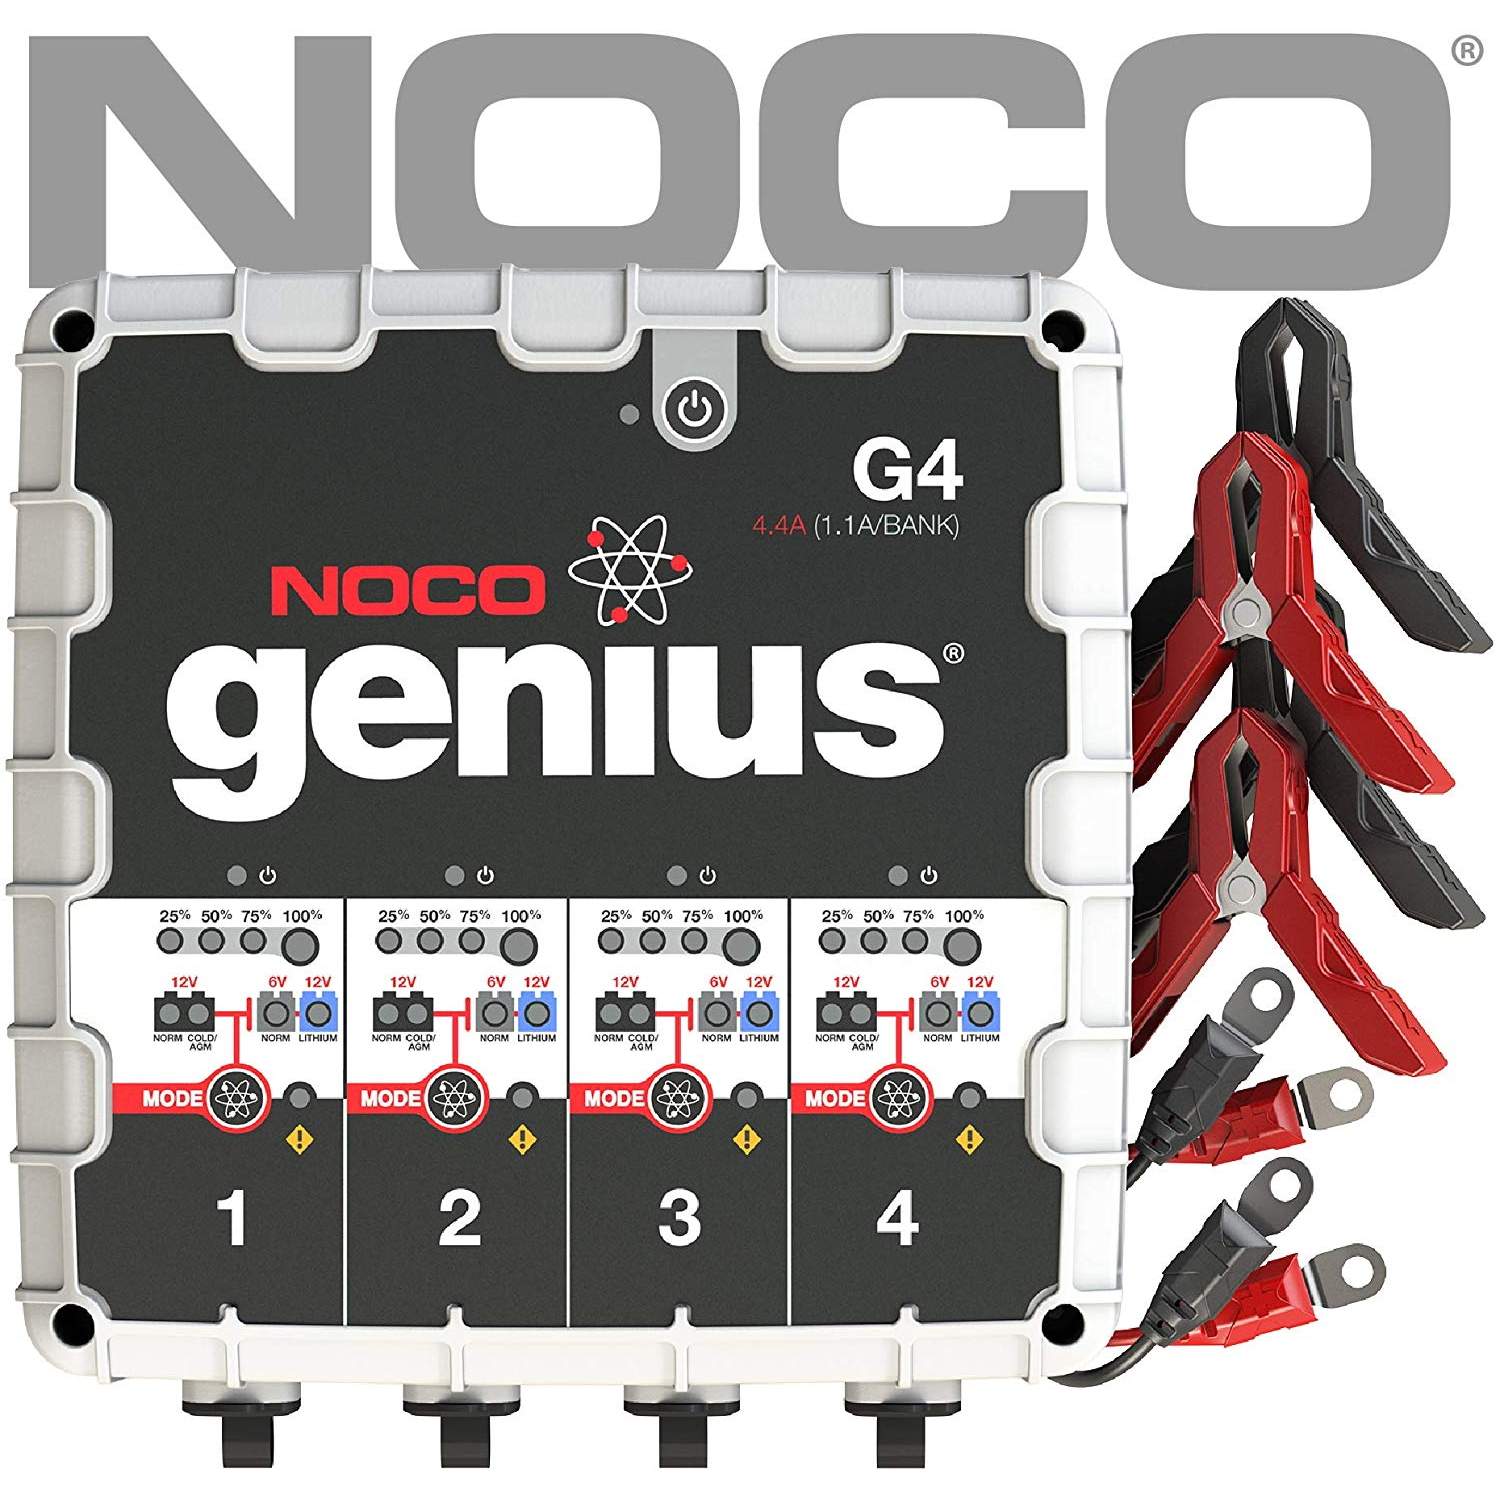 NOCO Genius G4